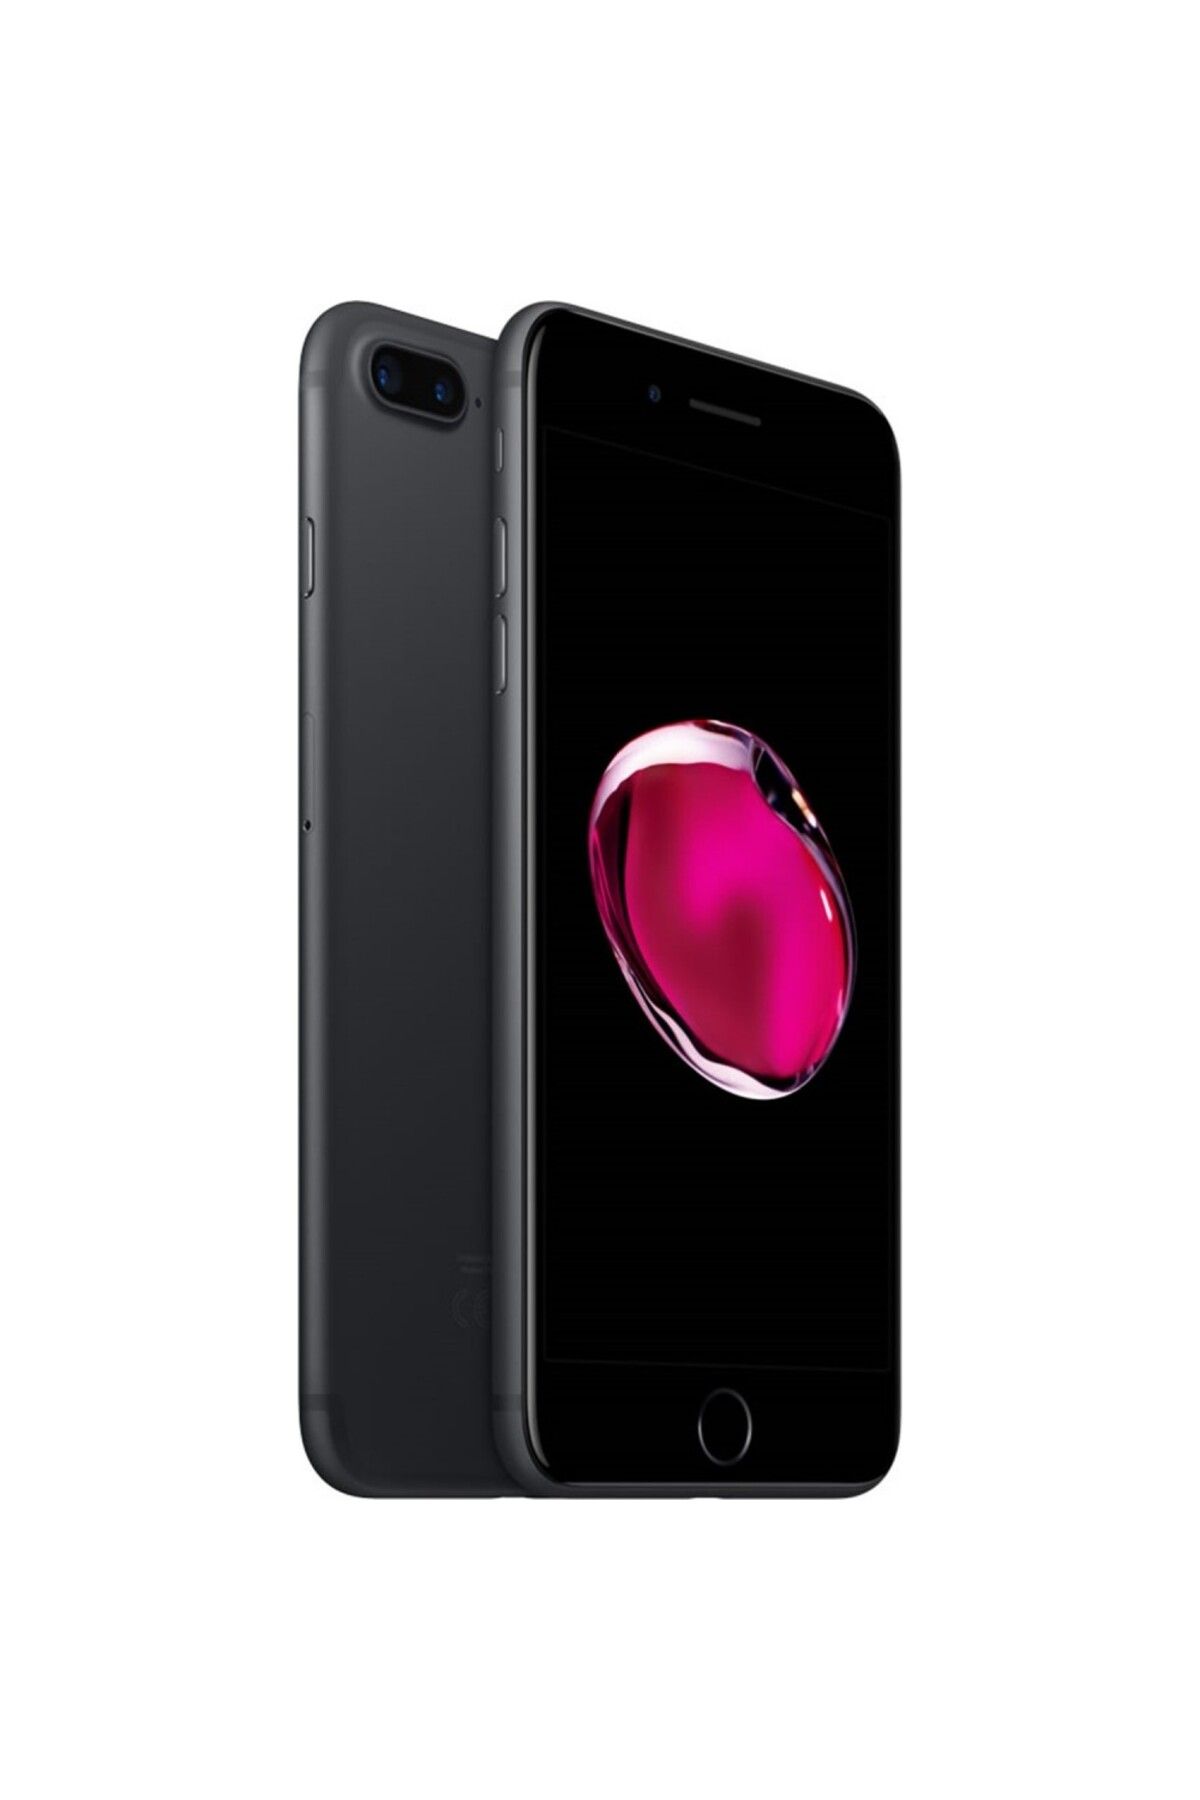 Apple Yenilenmiş iPhone 7 Plus 128GB Siyah A Kalite